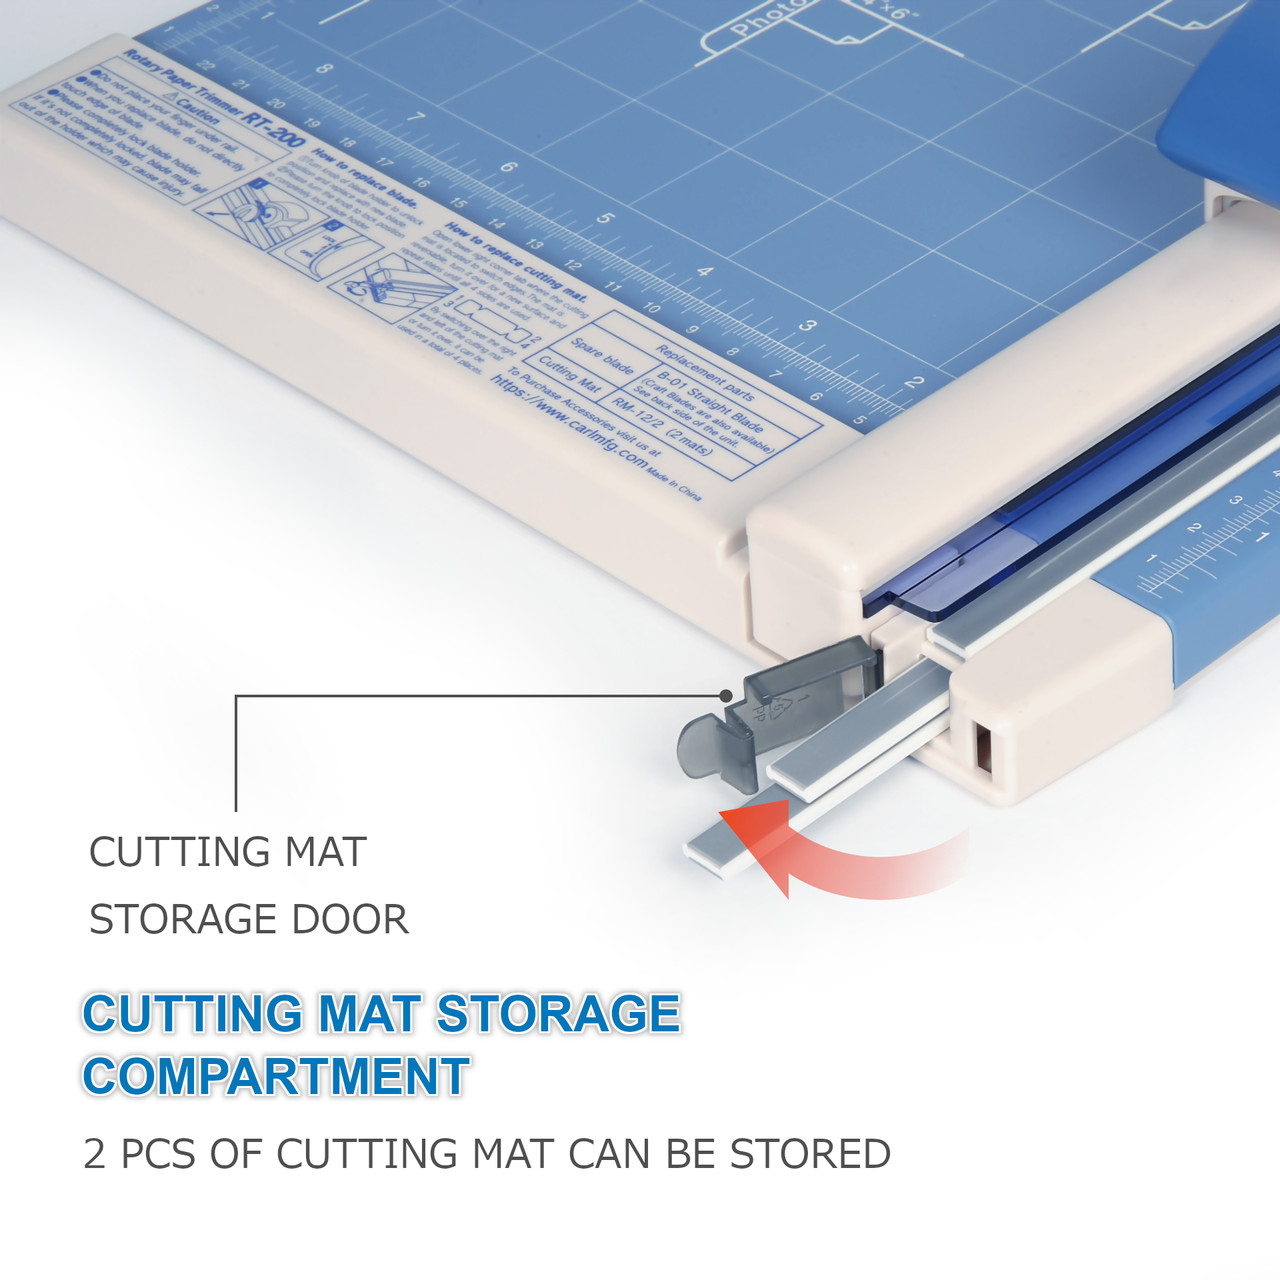 Crafter's Companion™ 13 x 19 Glass Cutting Mat